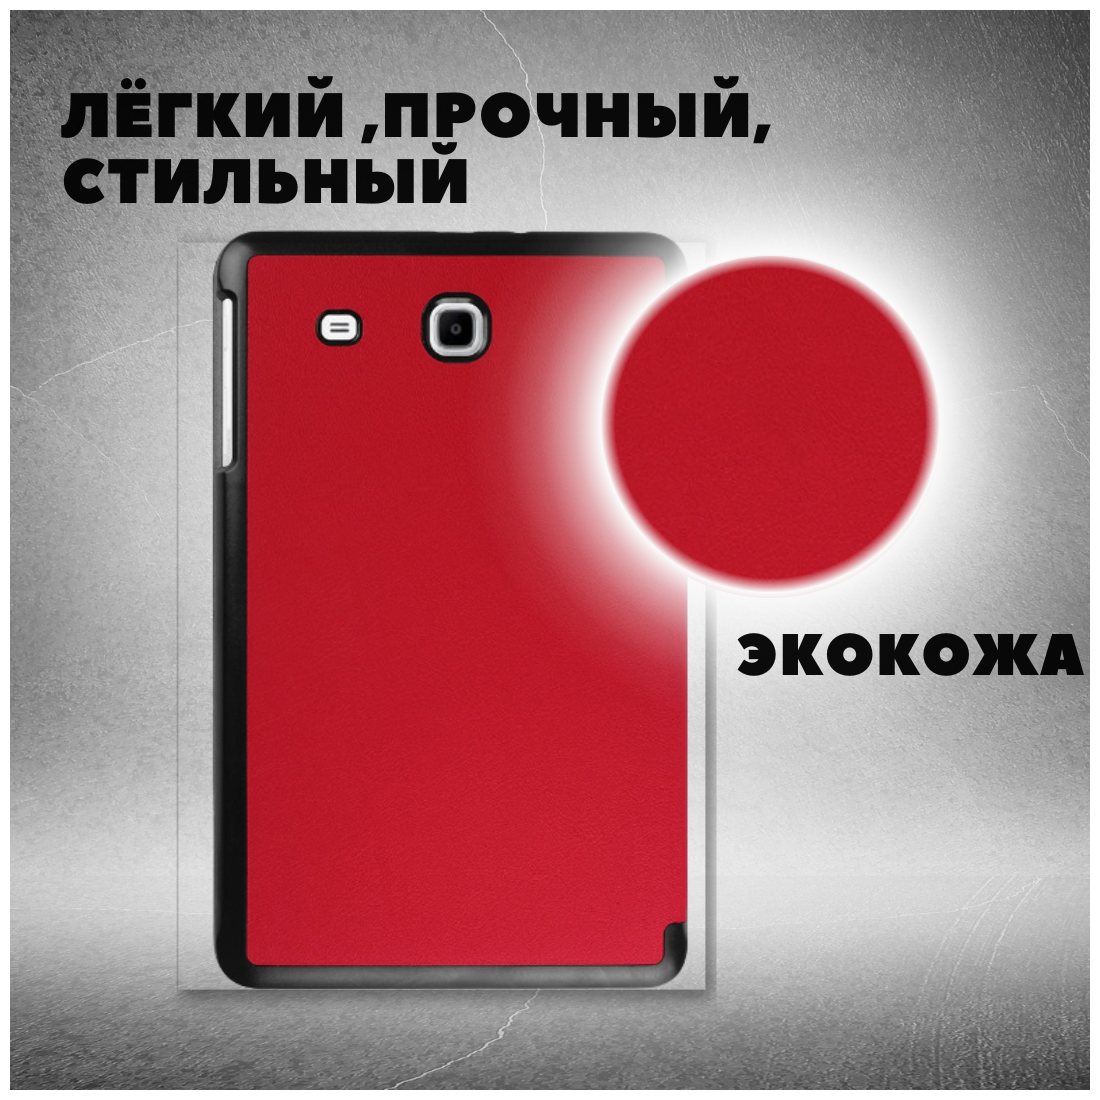 Чехол книжка /Планшетный чехол для Samsung Galaxy Tab E 96 T561/T560 / Самсунг Галакси Таб Е Tab E 96 T561/T560 Плюс с магнитом /Красный